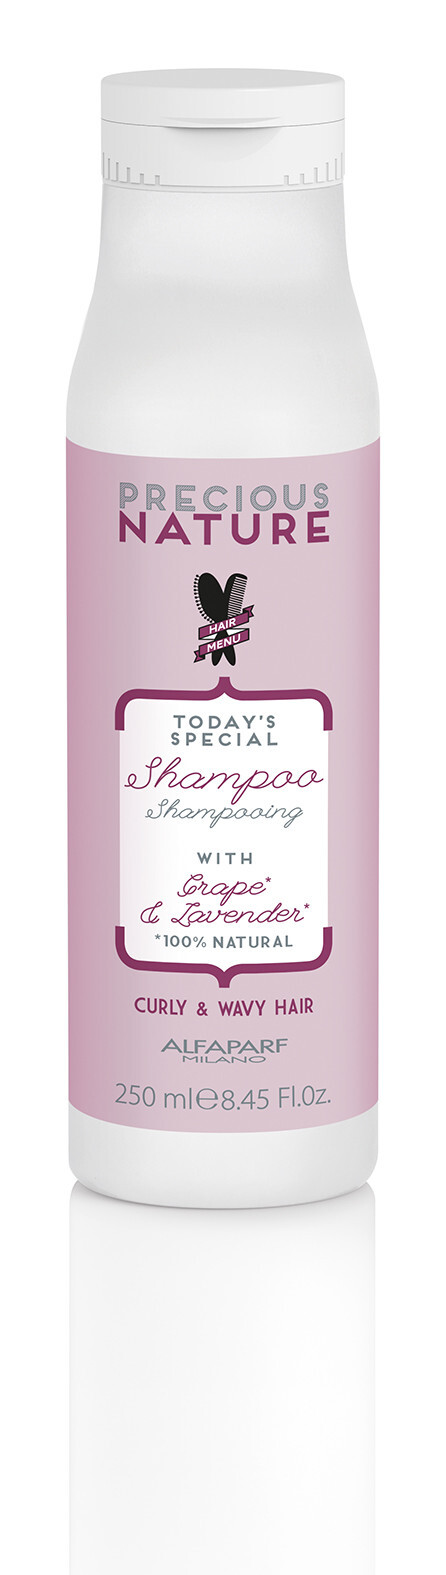 Alfaparf Curly & Wavy Hair Shampoo 250ml